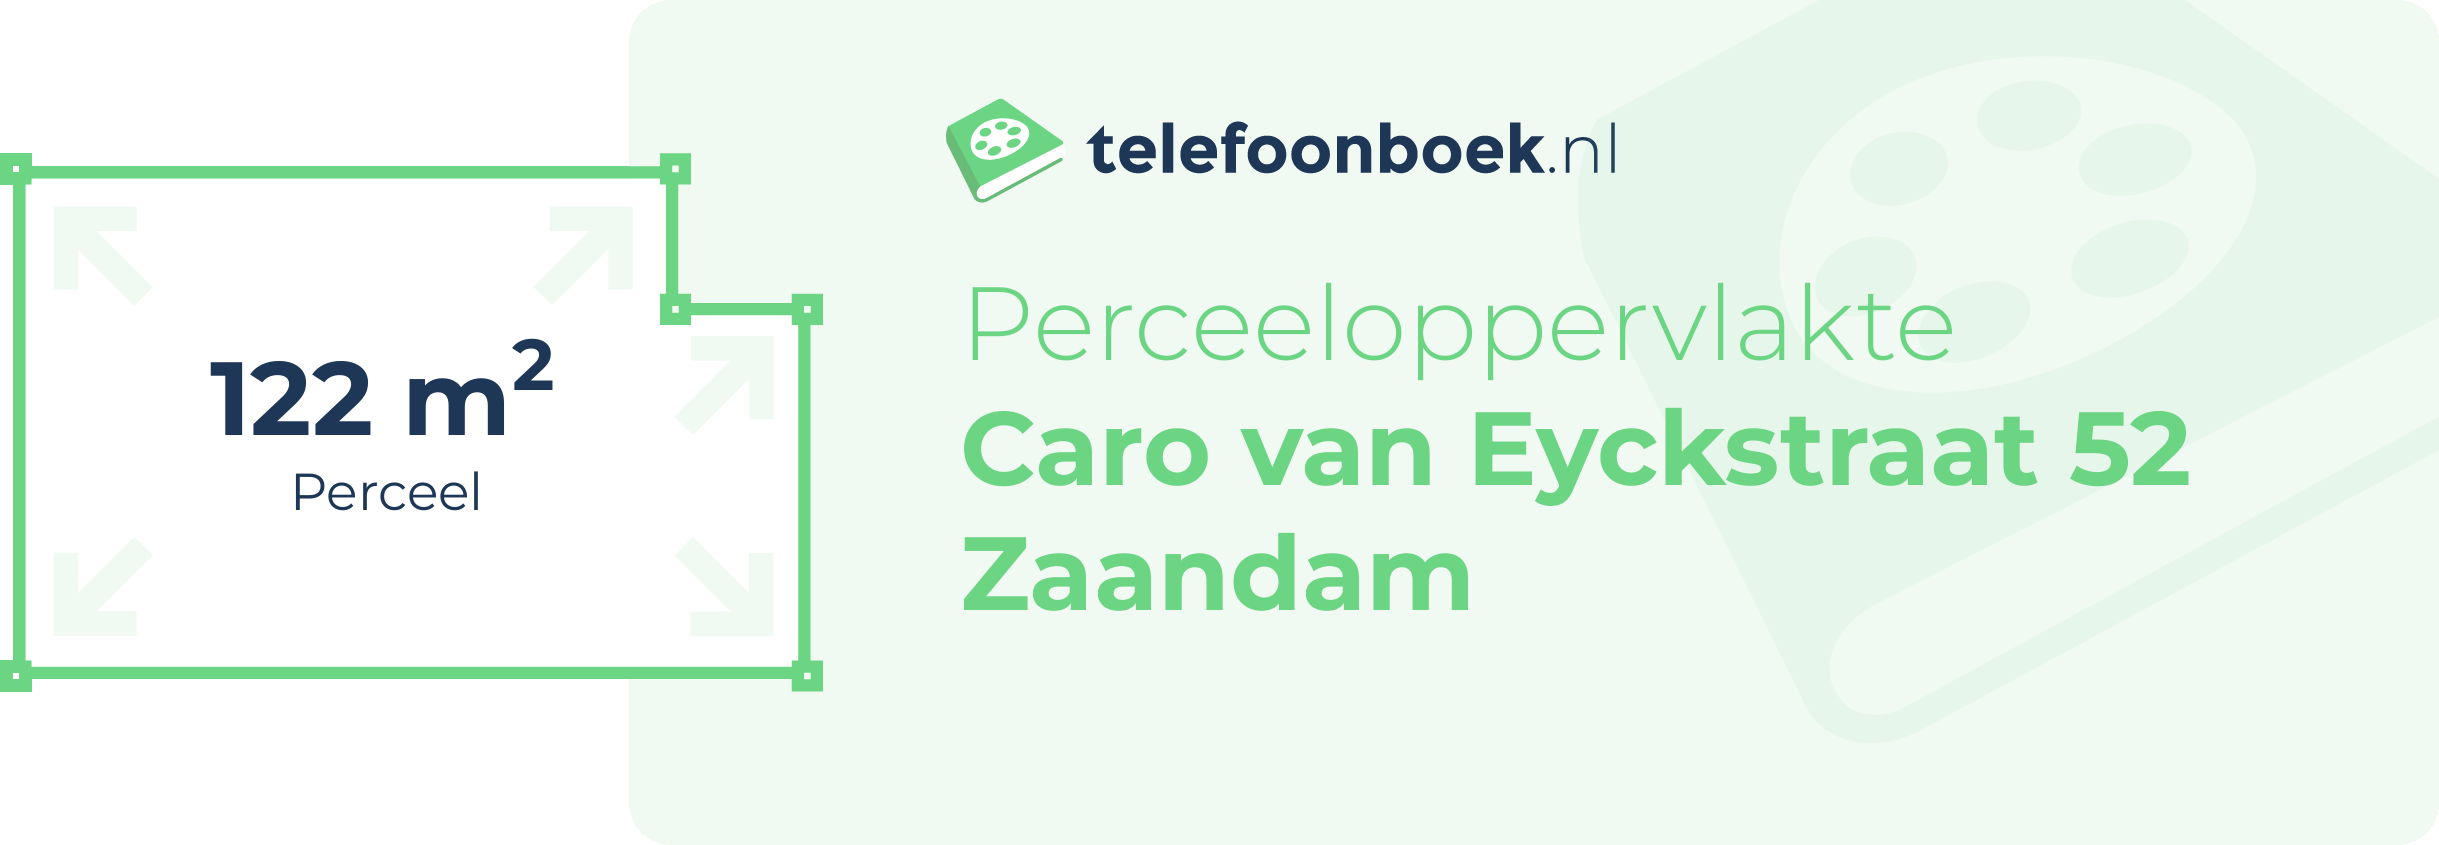 Perceeloppervlakte Caro Van Eyckstraat 52 Zaandam